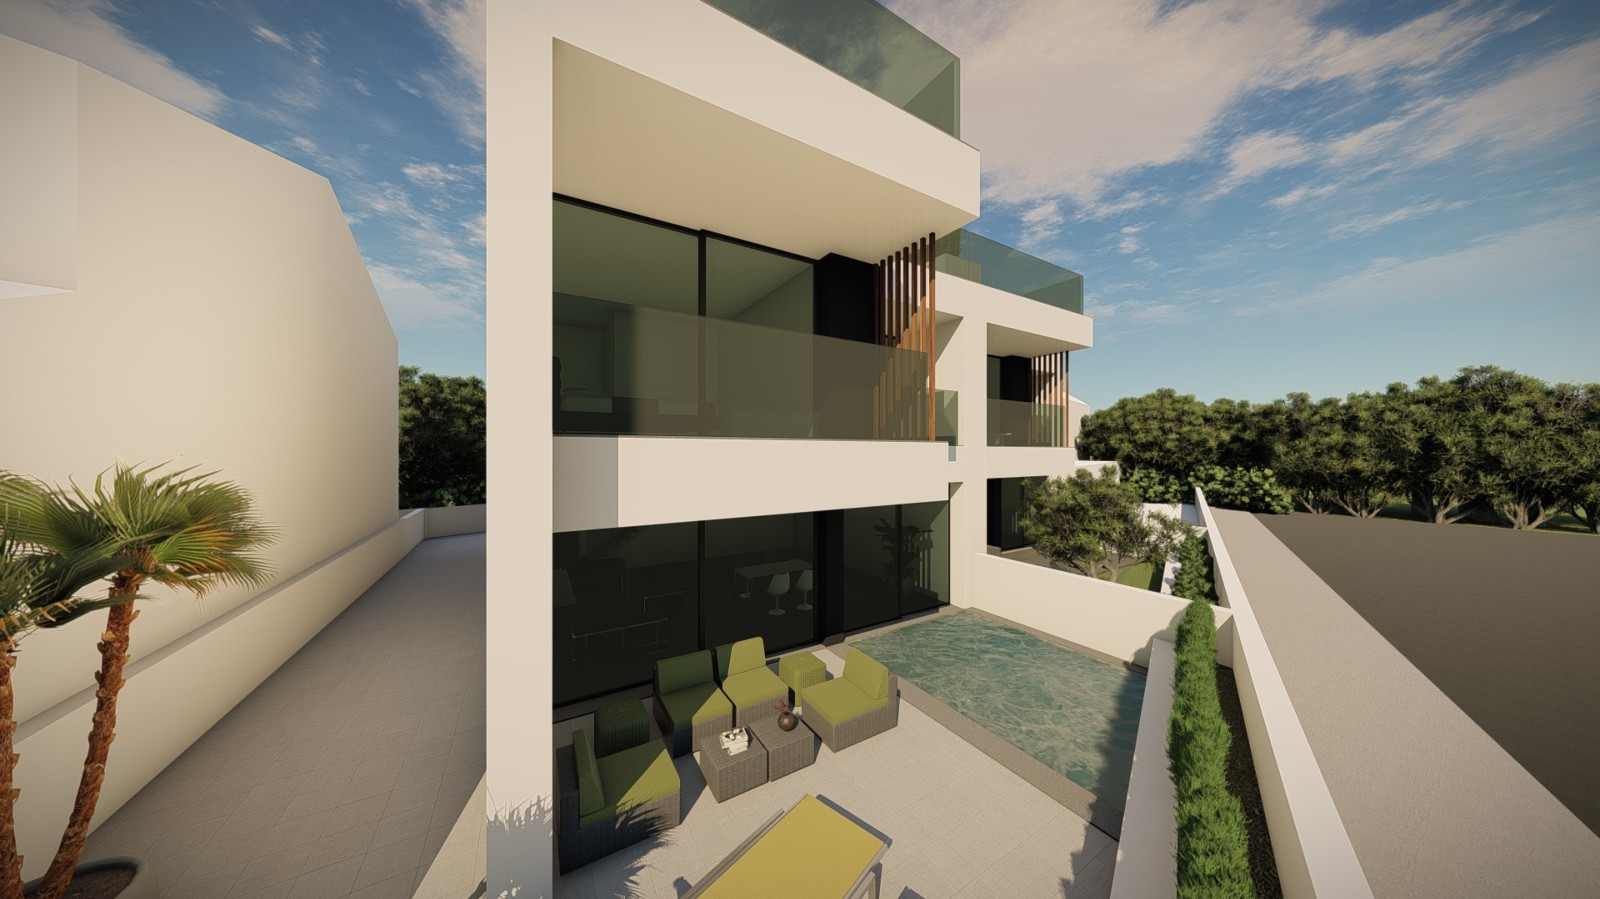 4 Bedroom Semi-detached villa with swimming pool, for sale, in Portimão, Algarve_218613